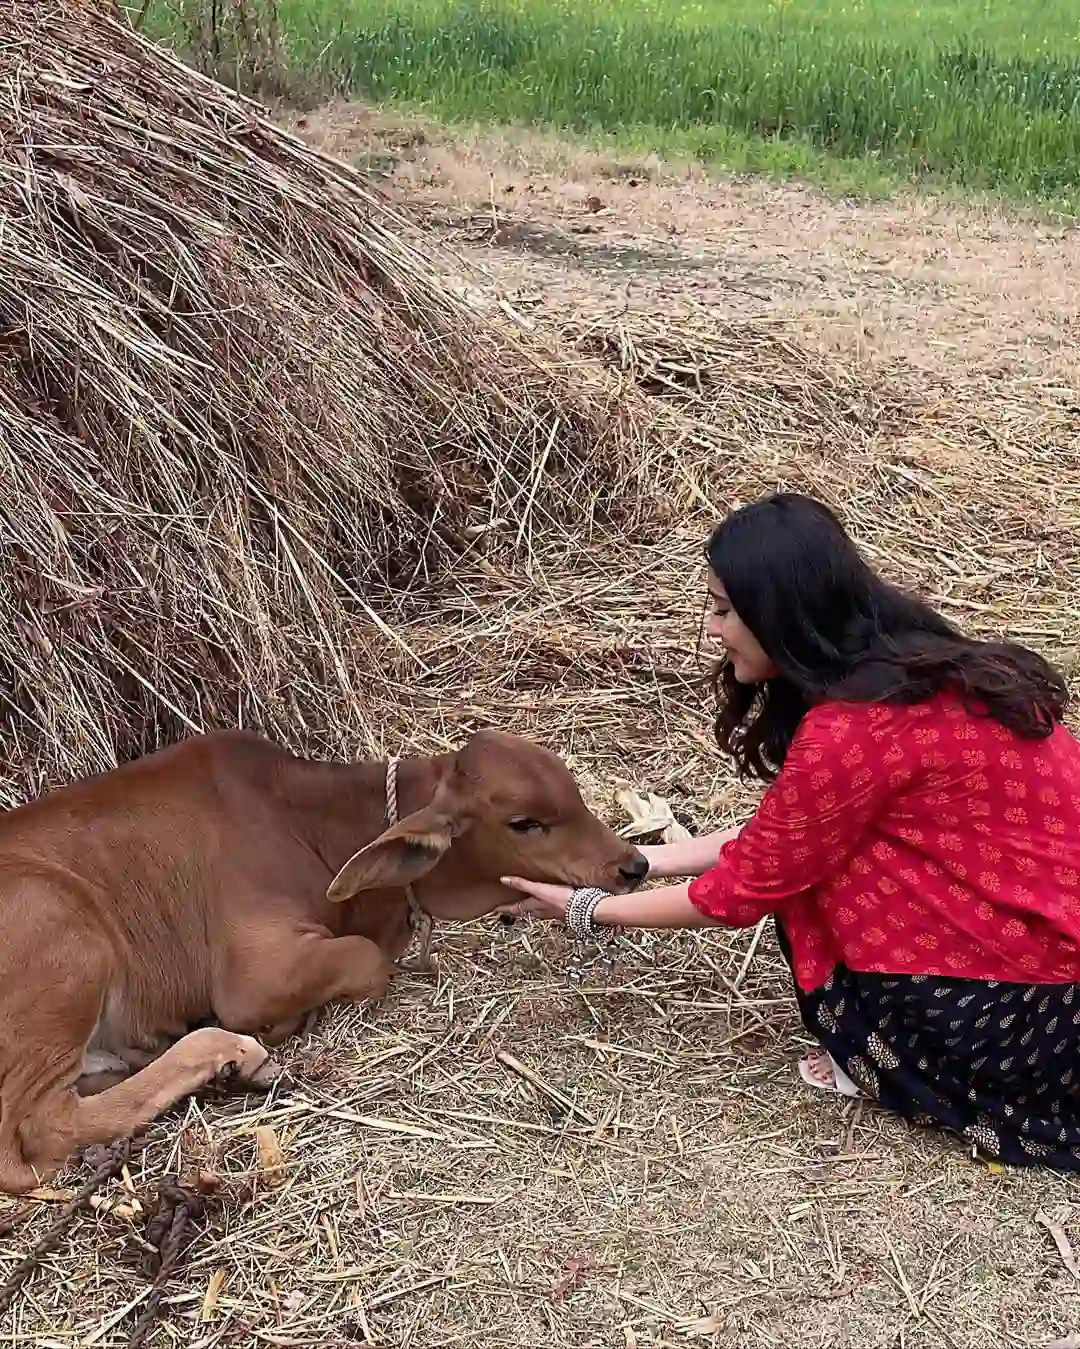 Malvika Sharma photos with the calf